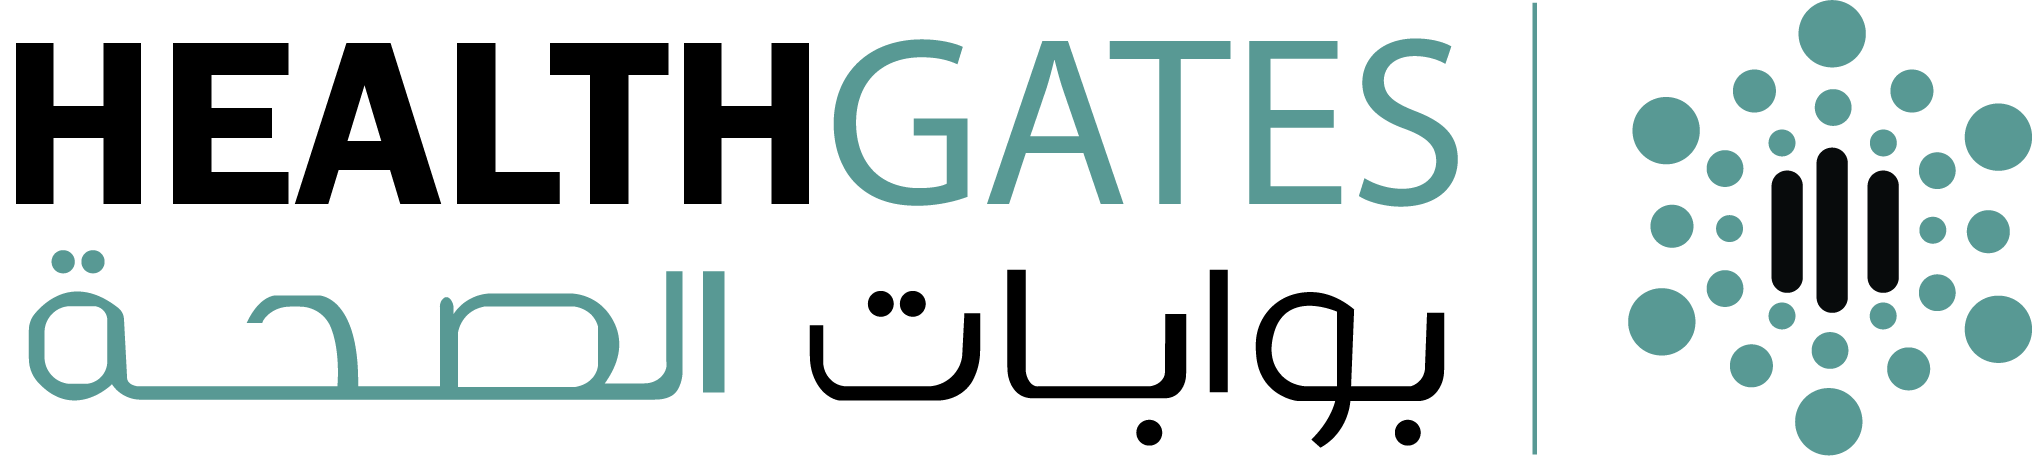 Health Gates Portal